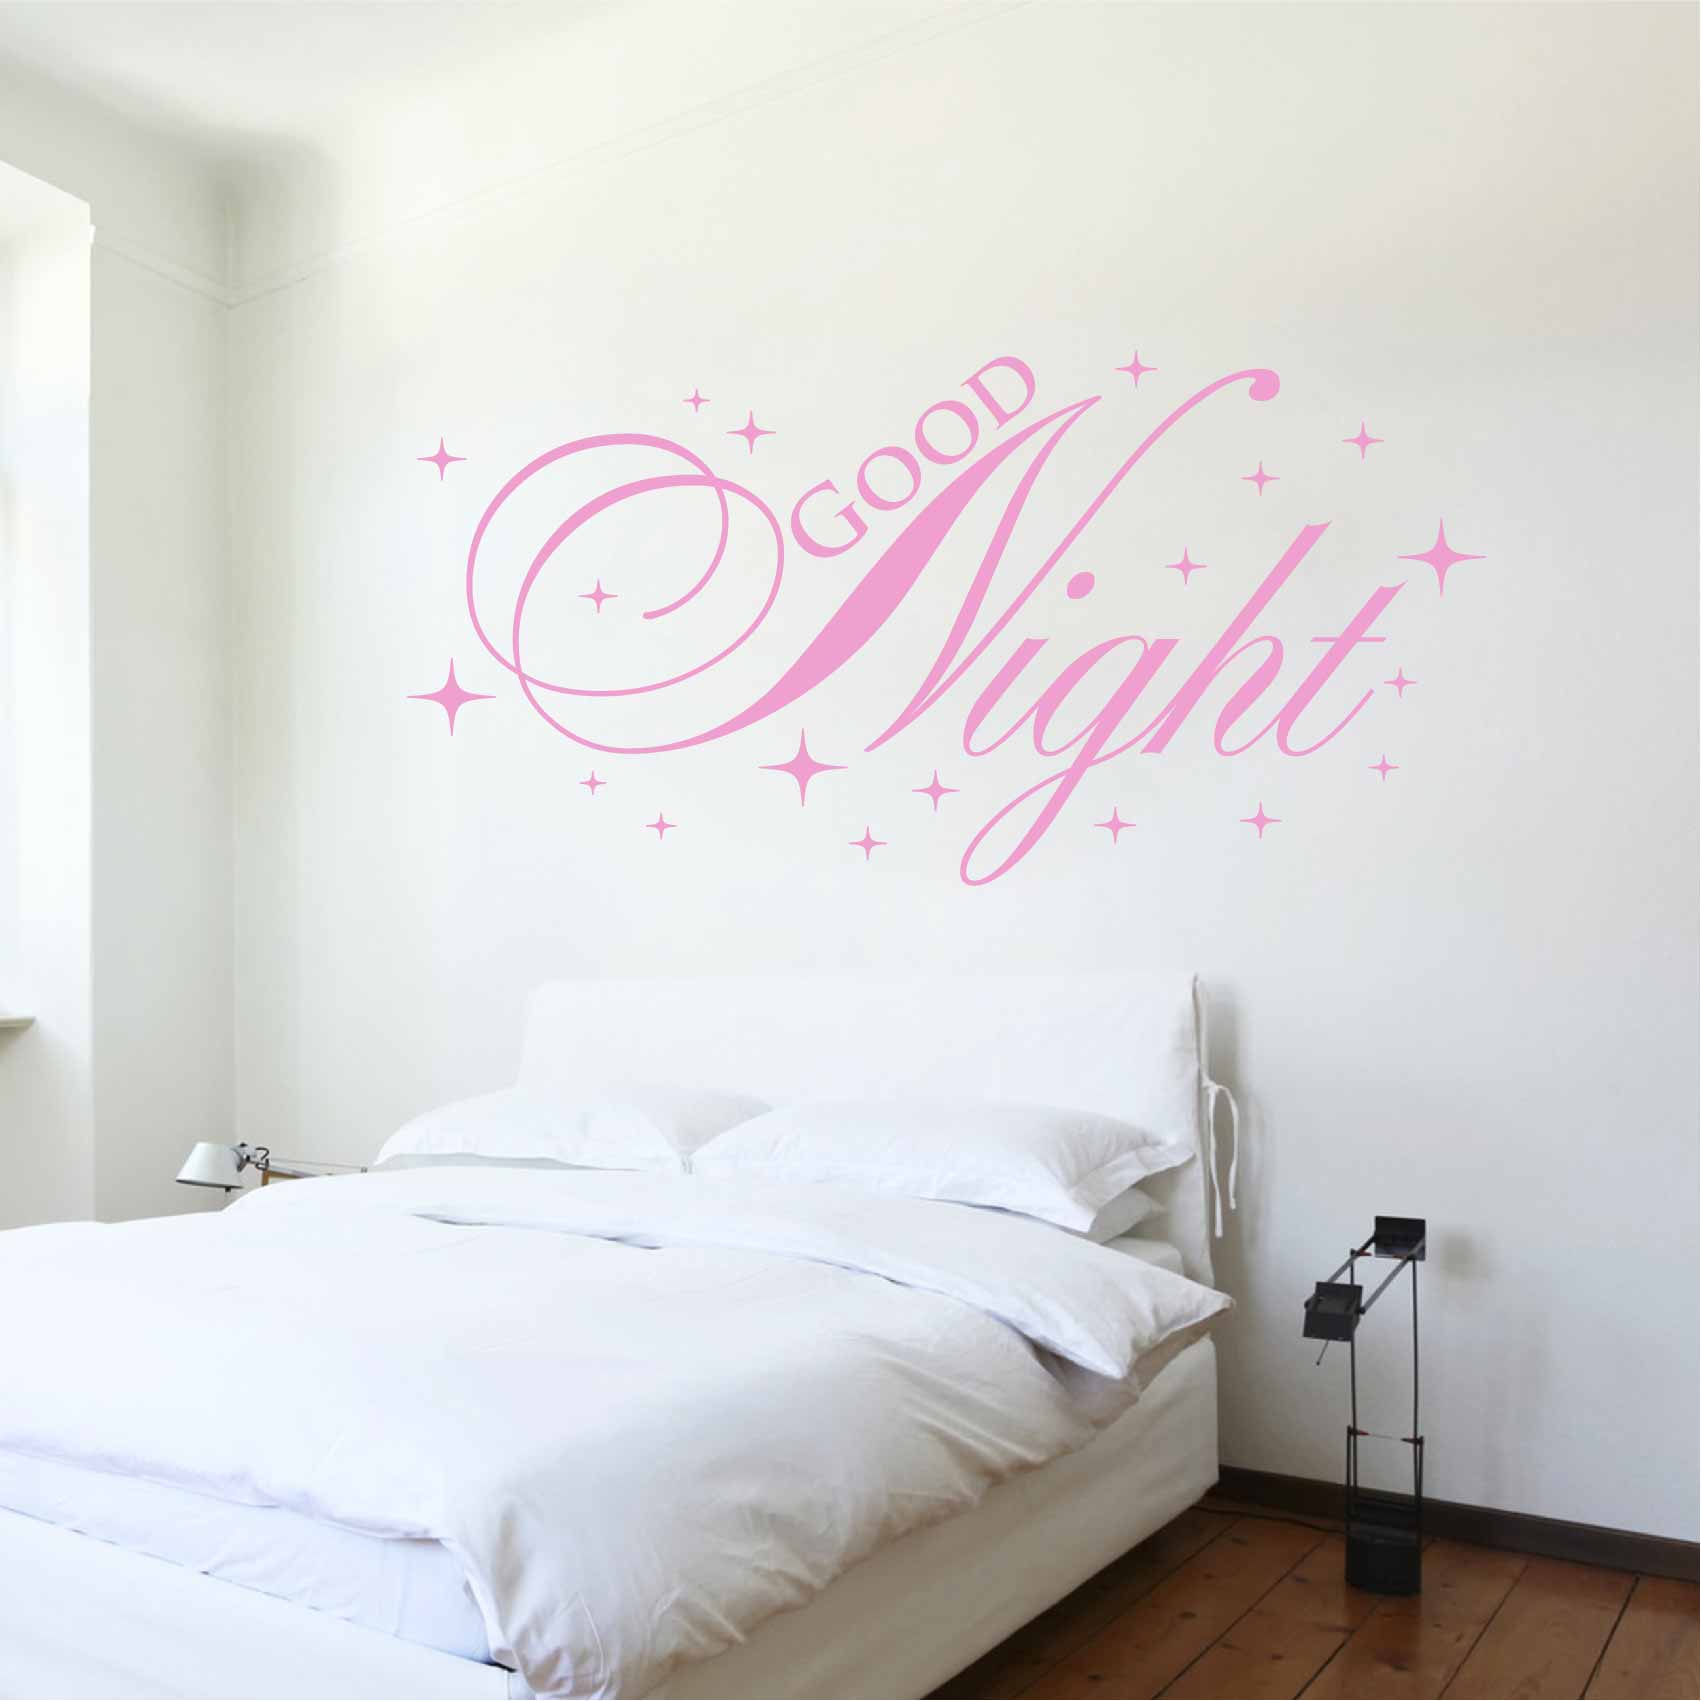 stickers-good-night-ref20chambre-autocollant-muraux-sticker-mural-deco-adulte-chambre-a-coucher-parents-couple-decoration